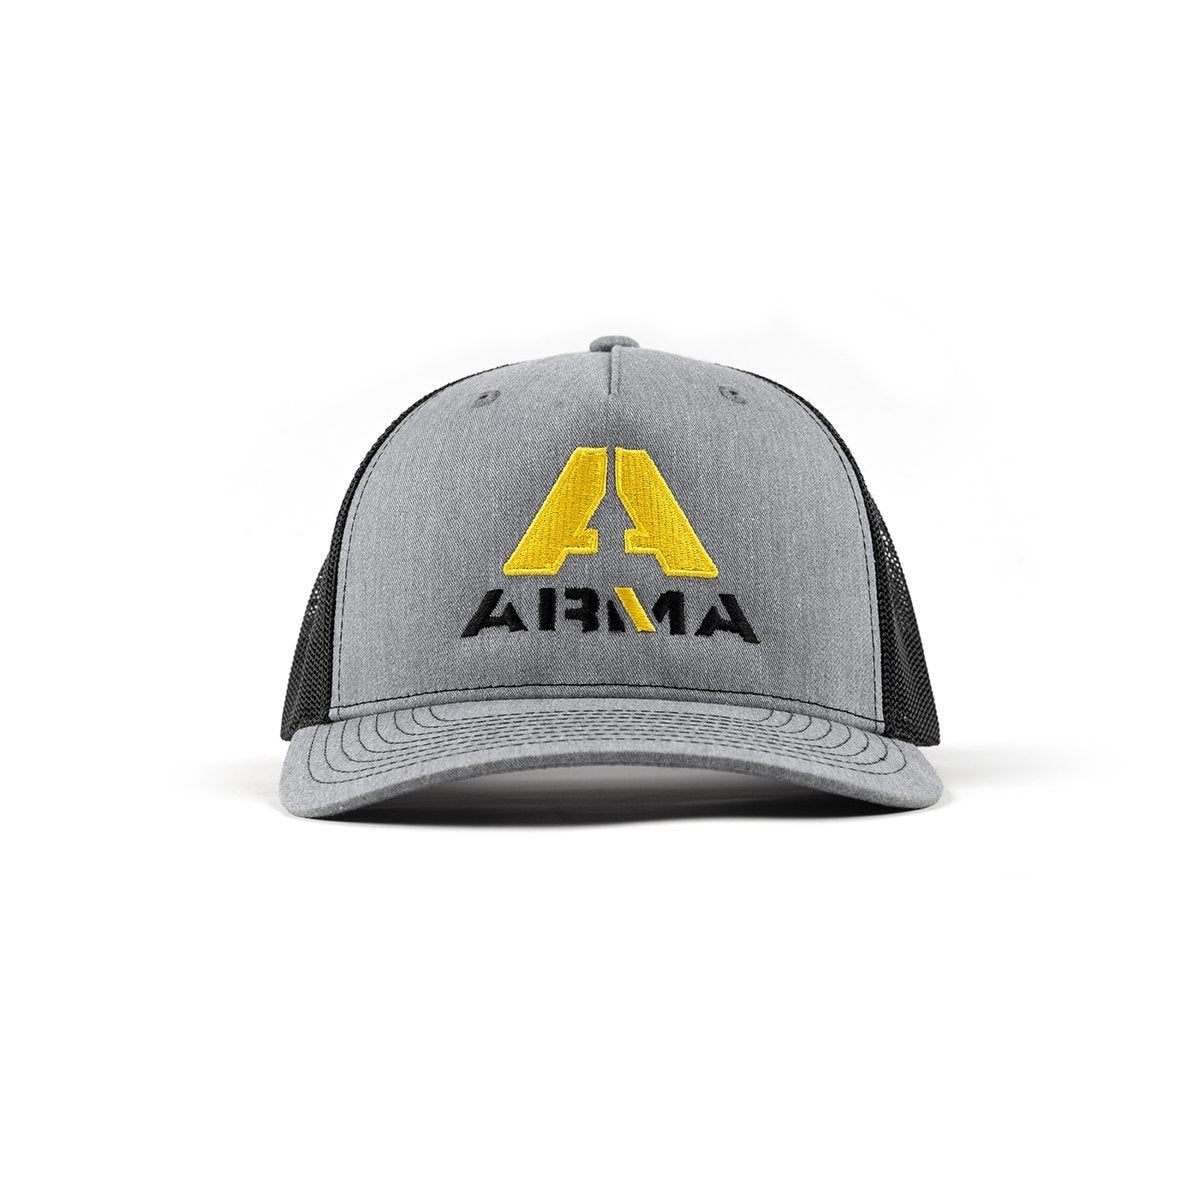 ARMA Stacked Hat (Heather Grey/Black) - Arma Sport